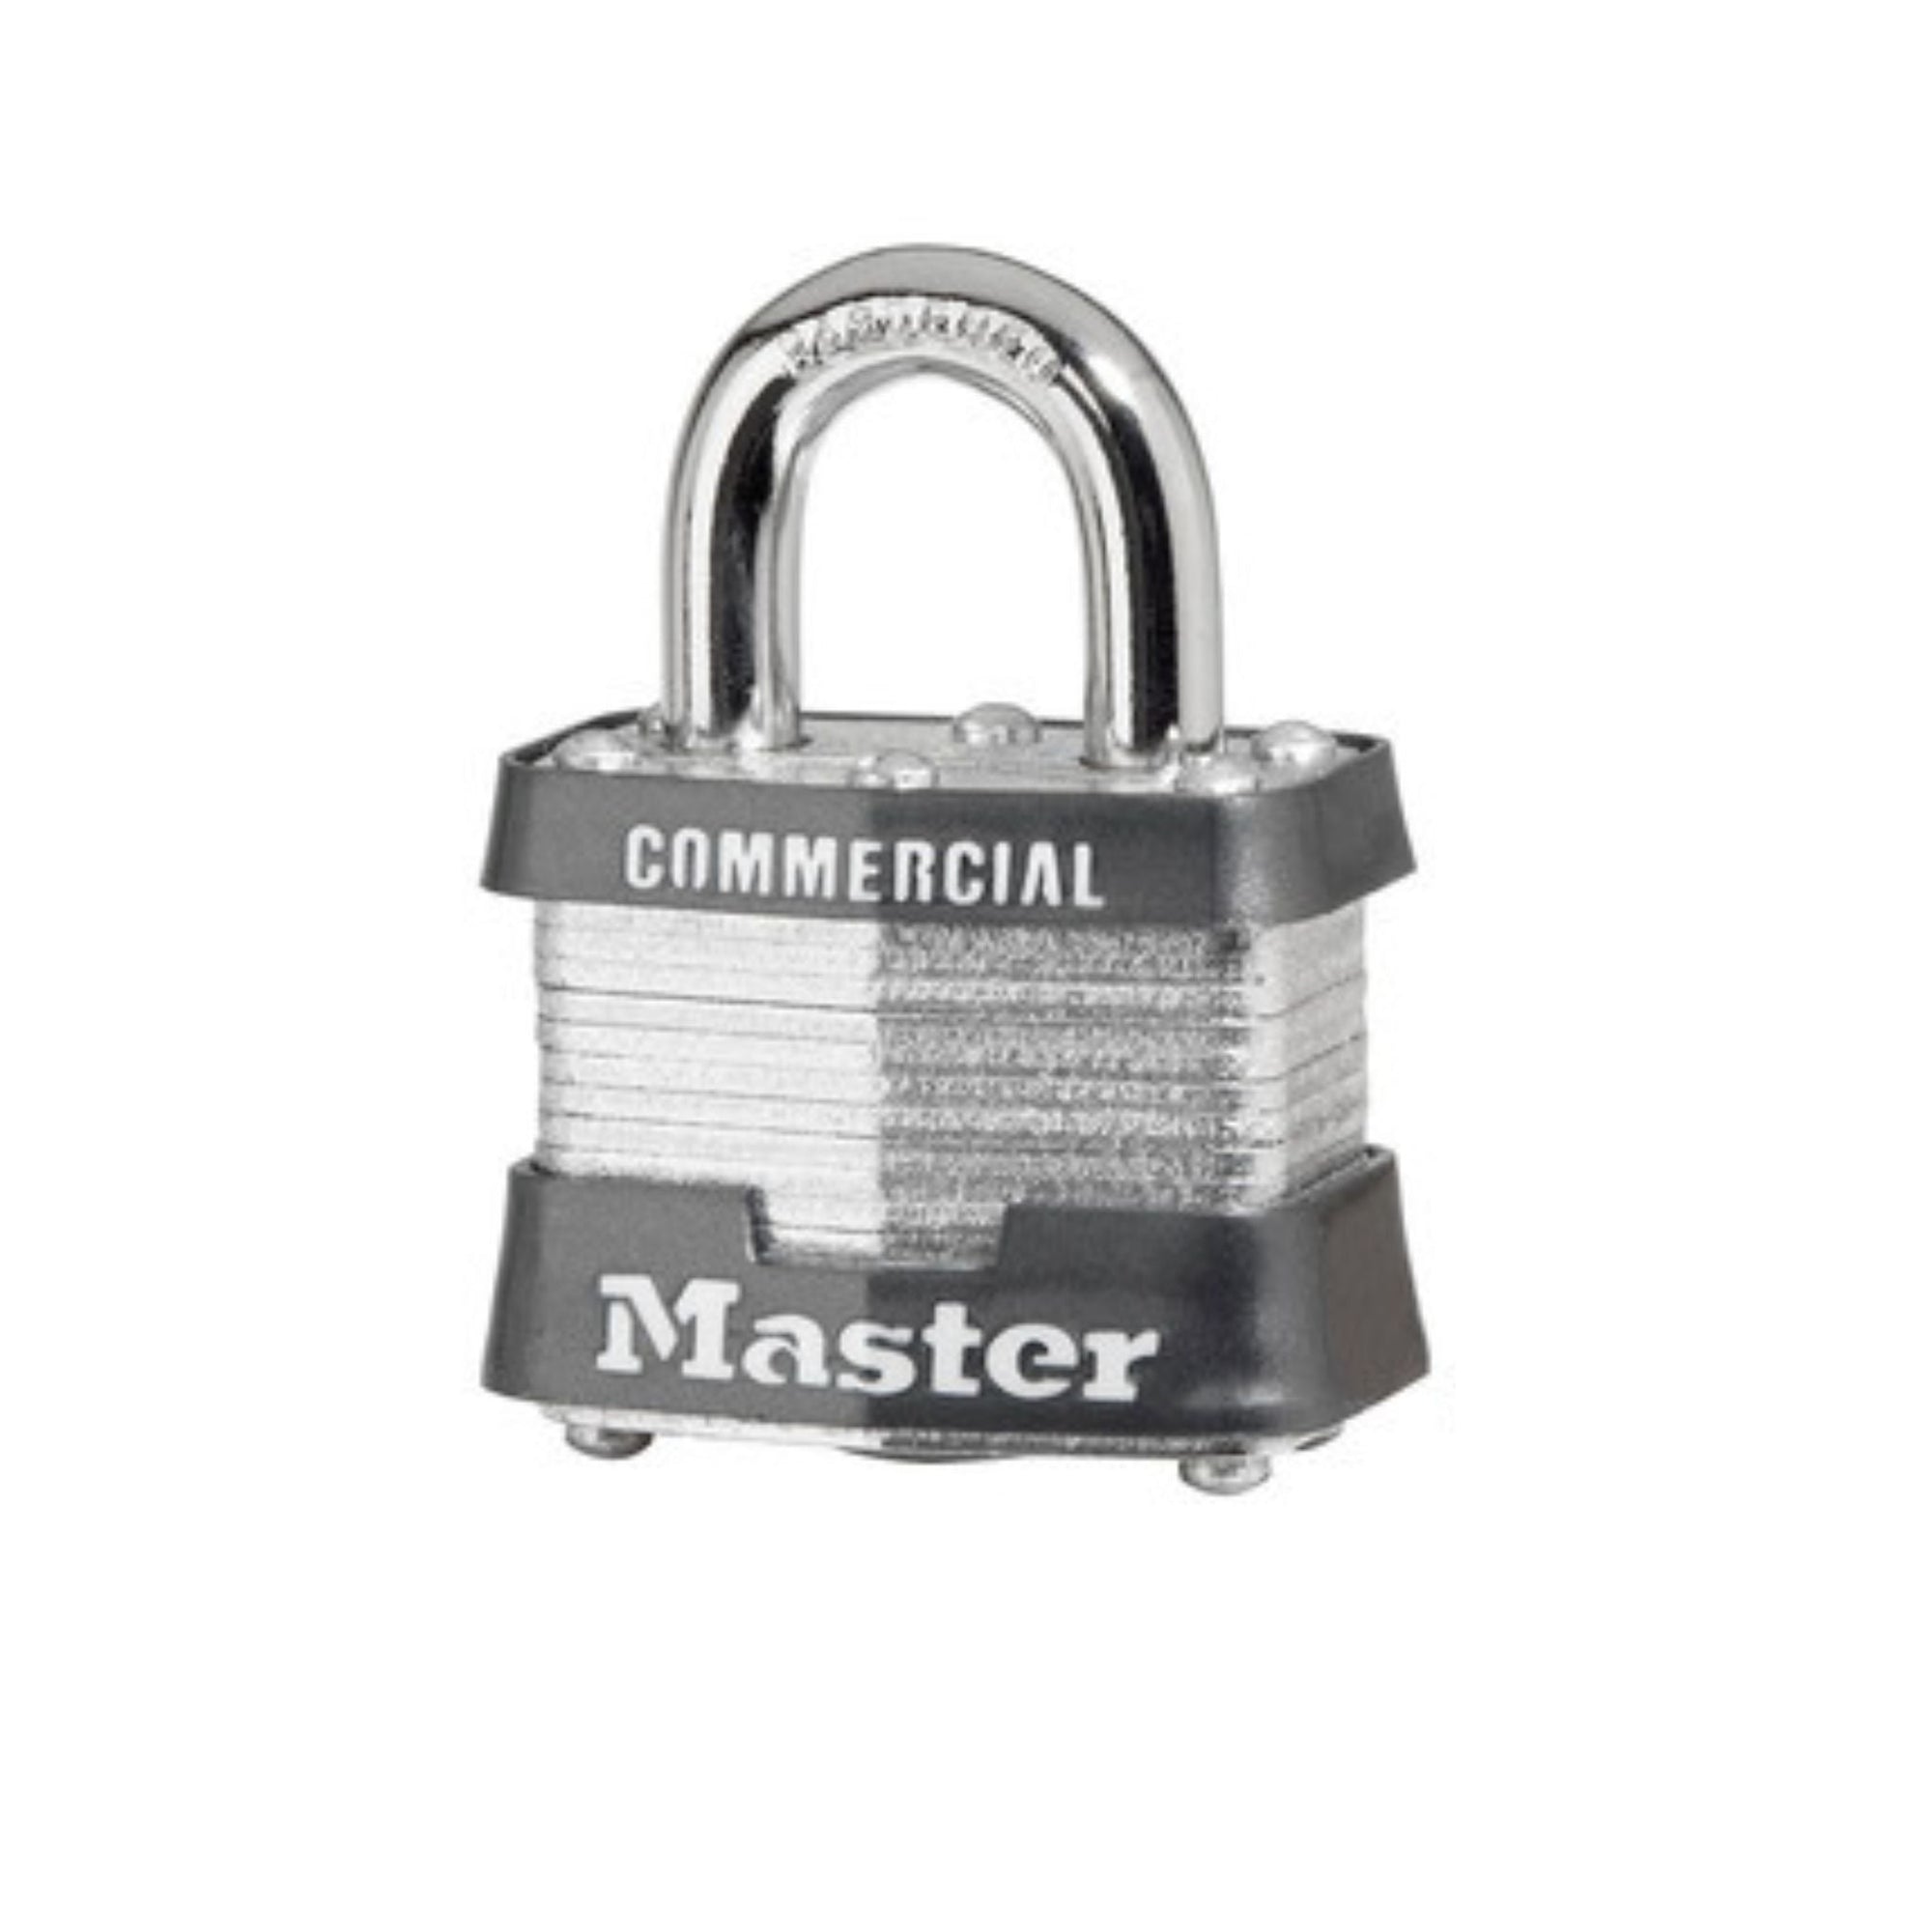 Master Lock 3KA 0308 Lock Laminated steel No. 3 Series Padlock Keyed to Match Existing Key Number KA0308 - The Lock Source